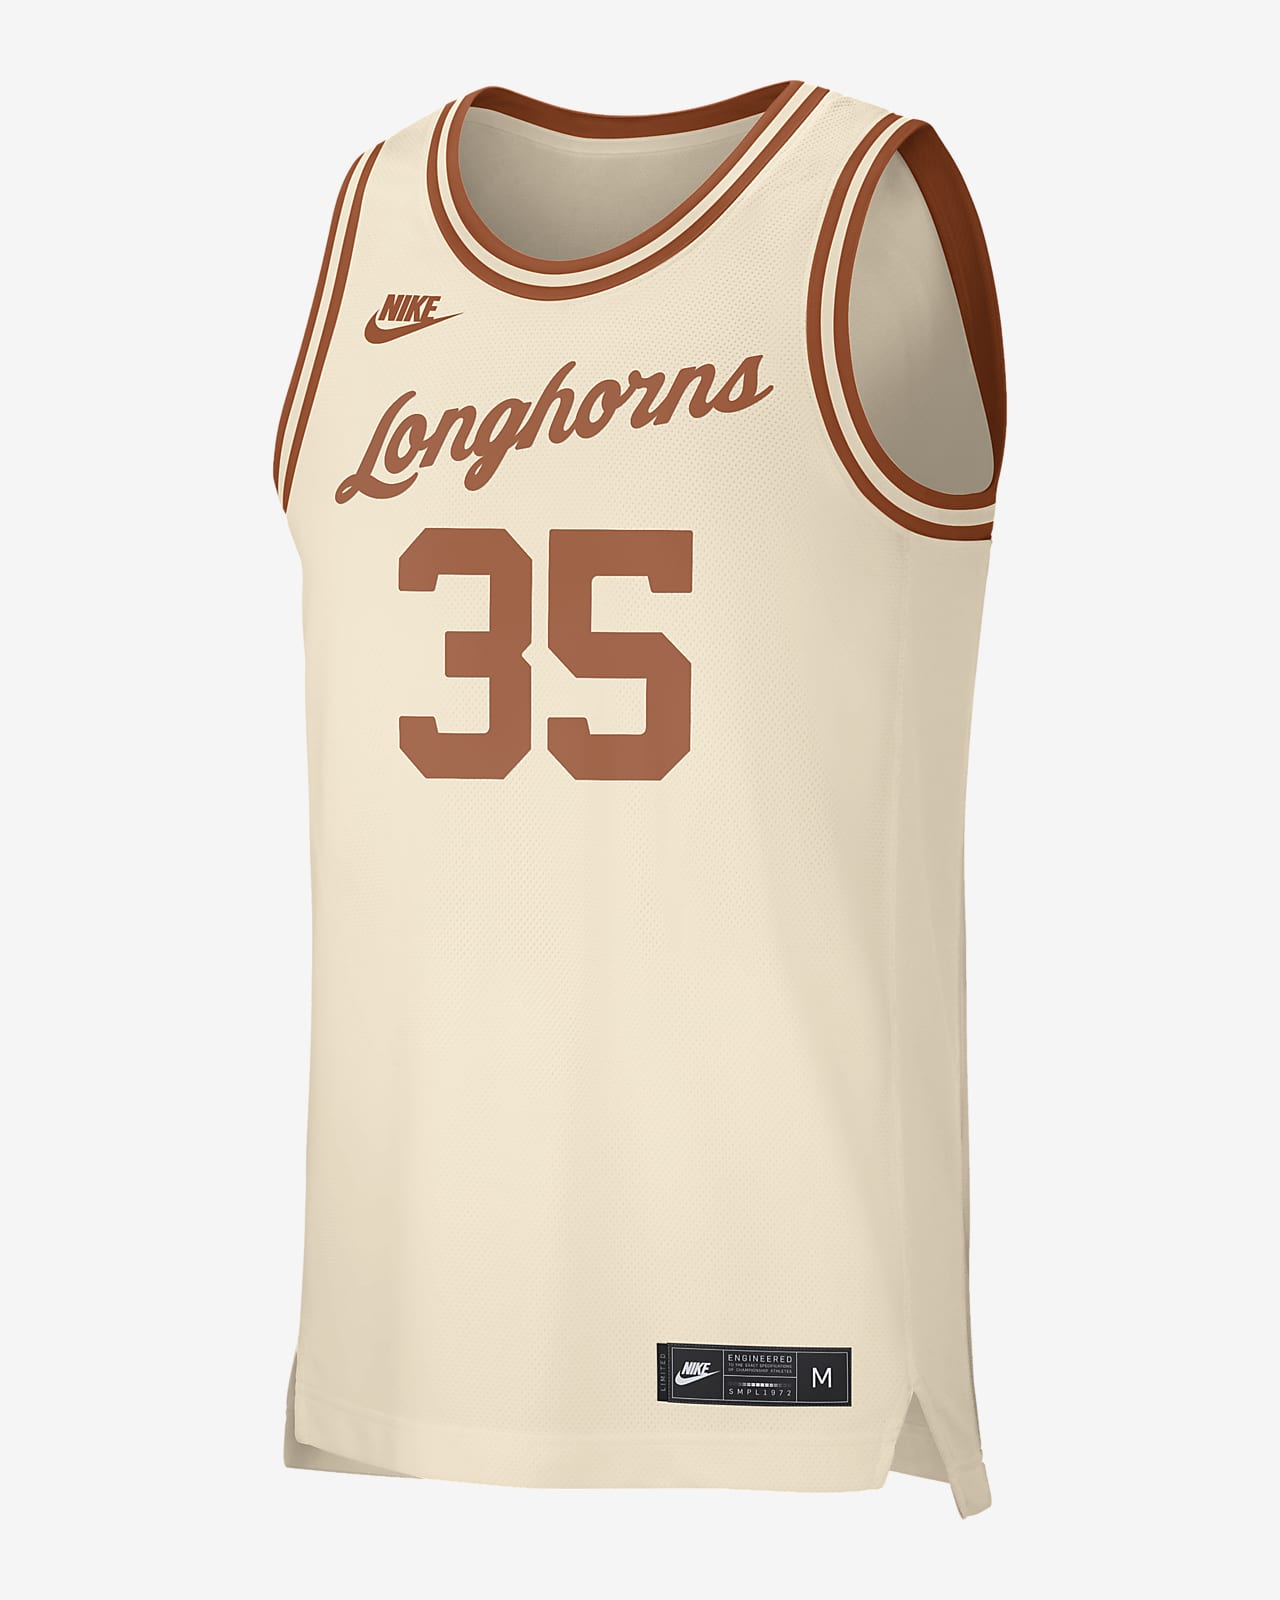 texas longhorns basketball uniforms